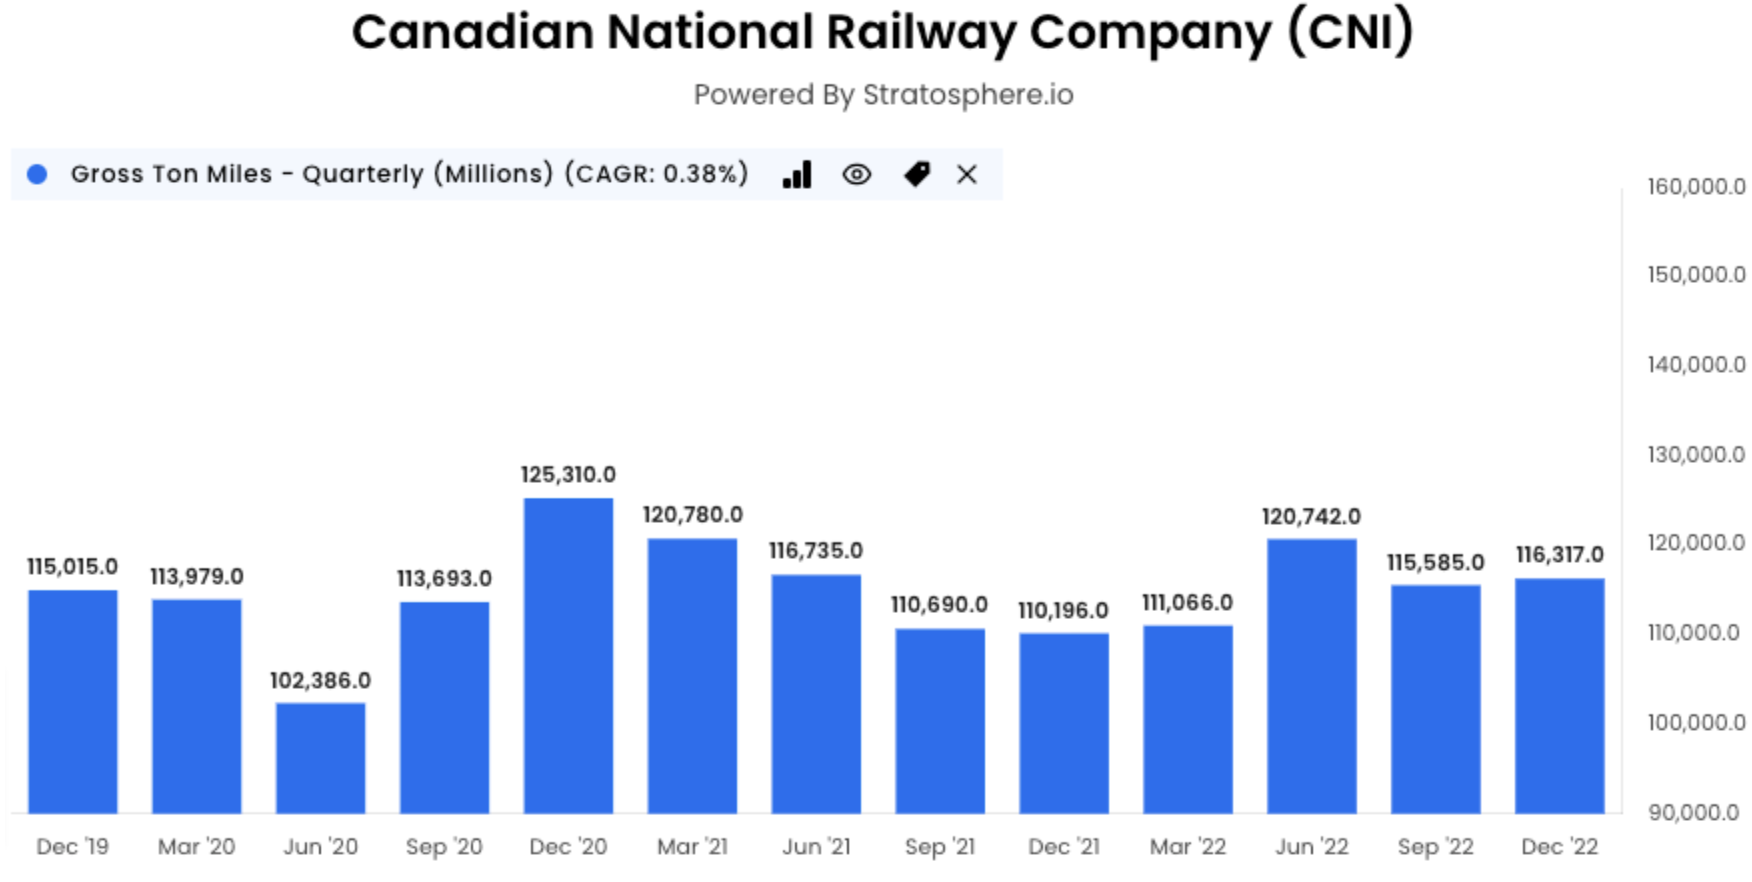 Canadian National Railway Company gross ton miles graph